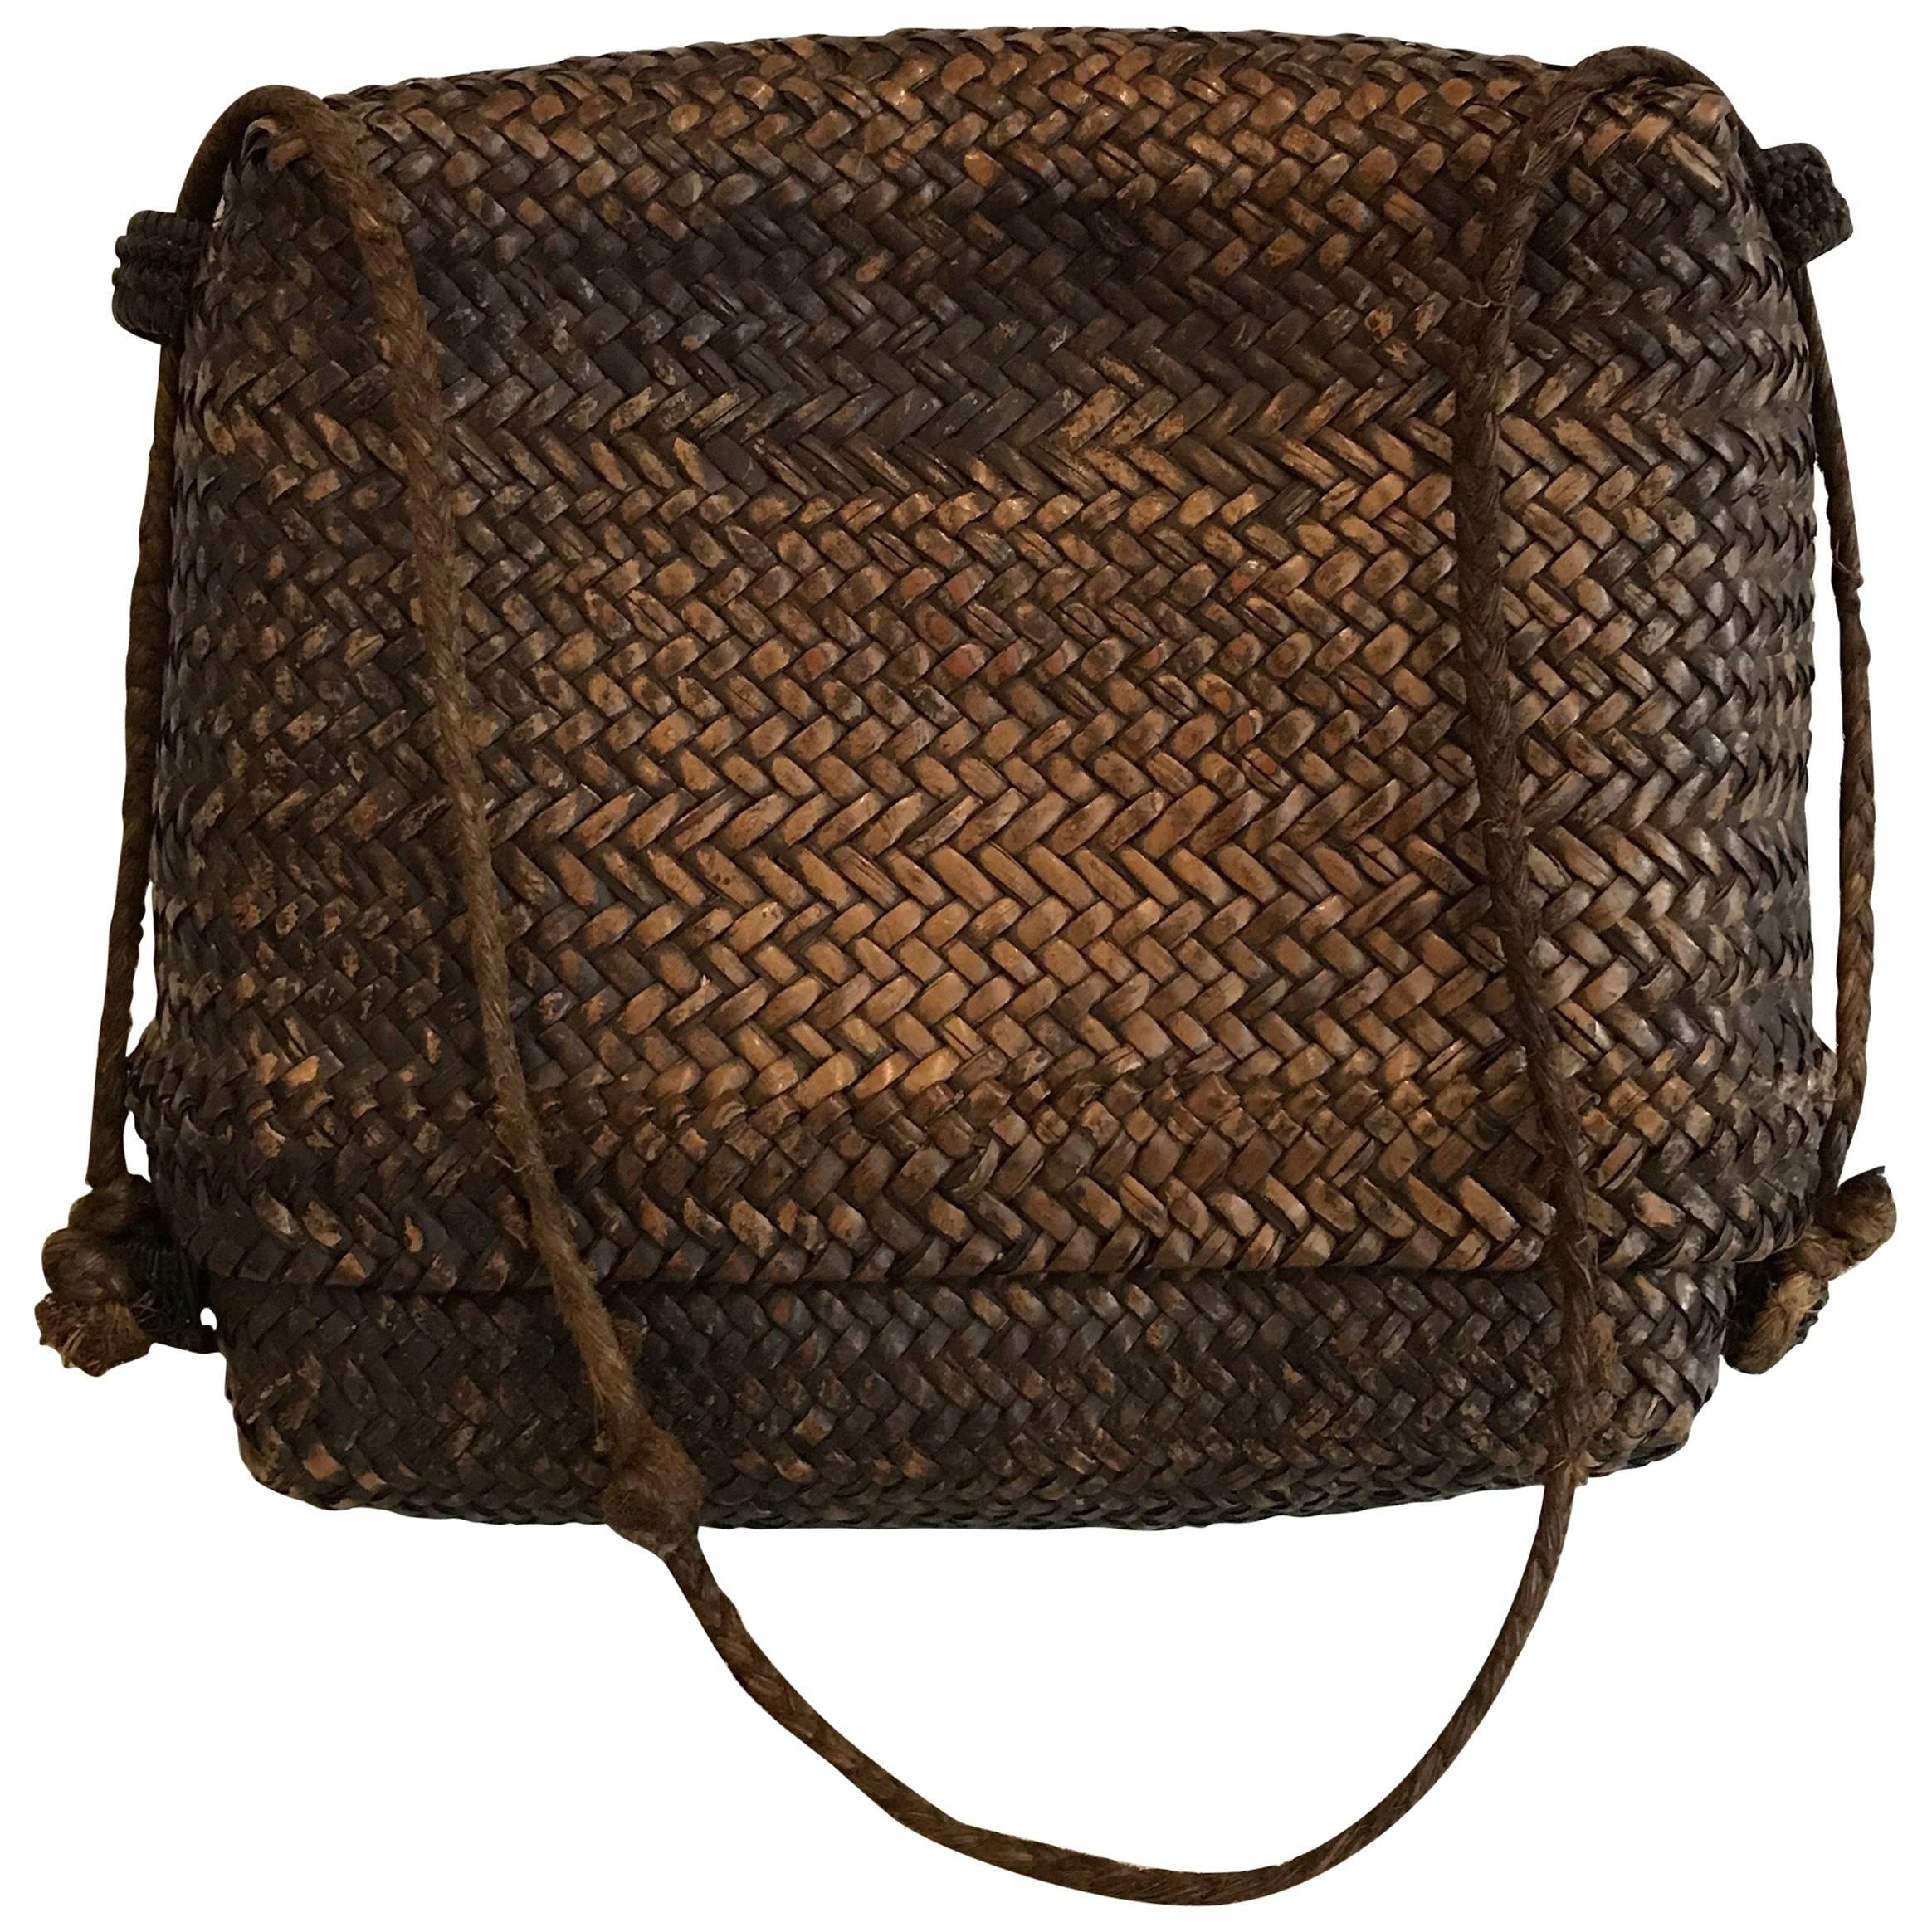 Early 20th Century Woven Thai Basket